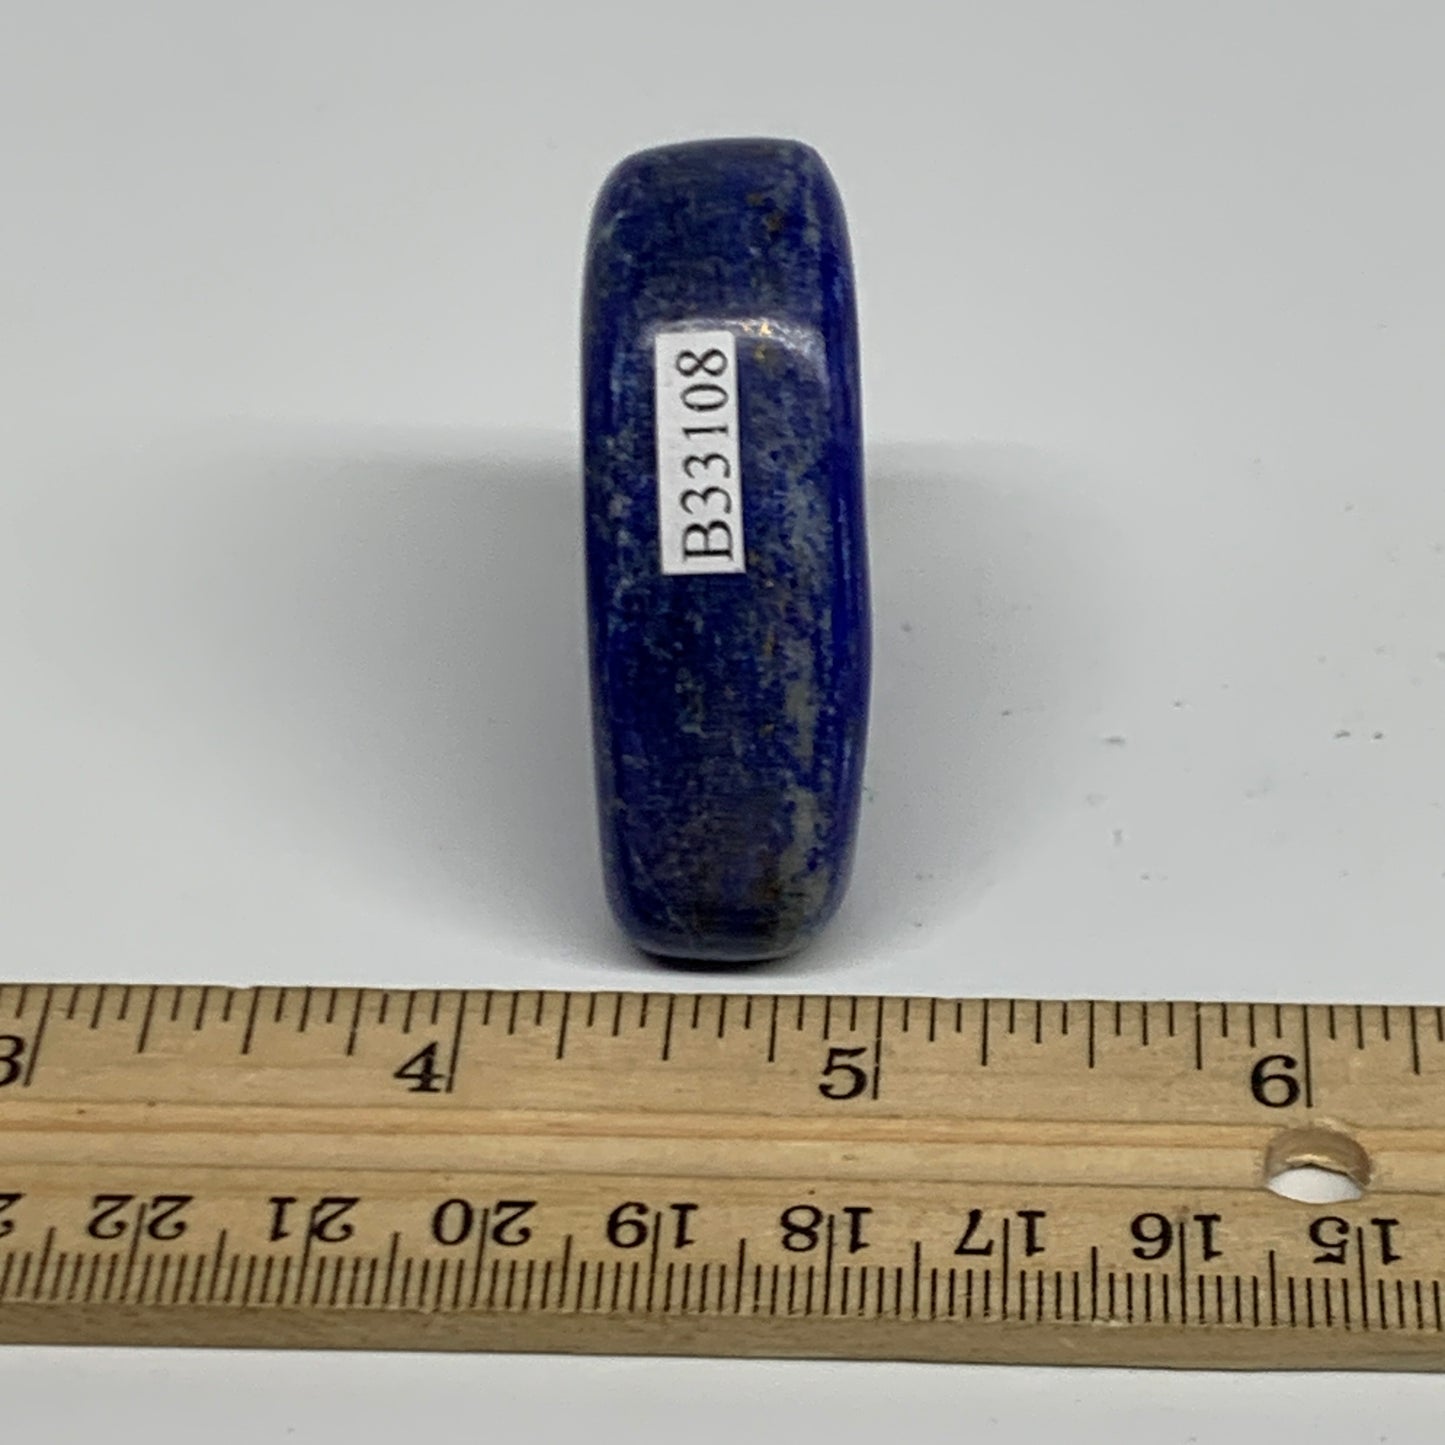 69.4g, 1.7"x1.7"x0.7",  Natural Freeform Lapis Lazuli from Afghanistan, B33108